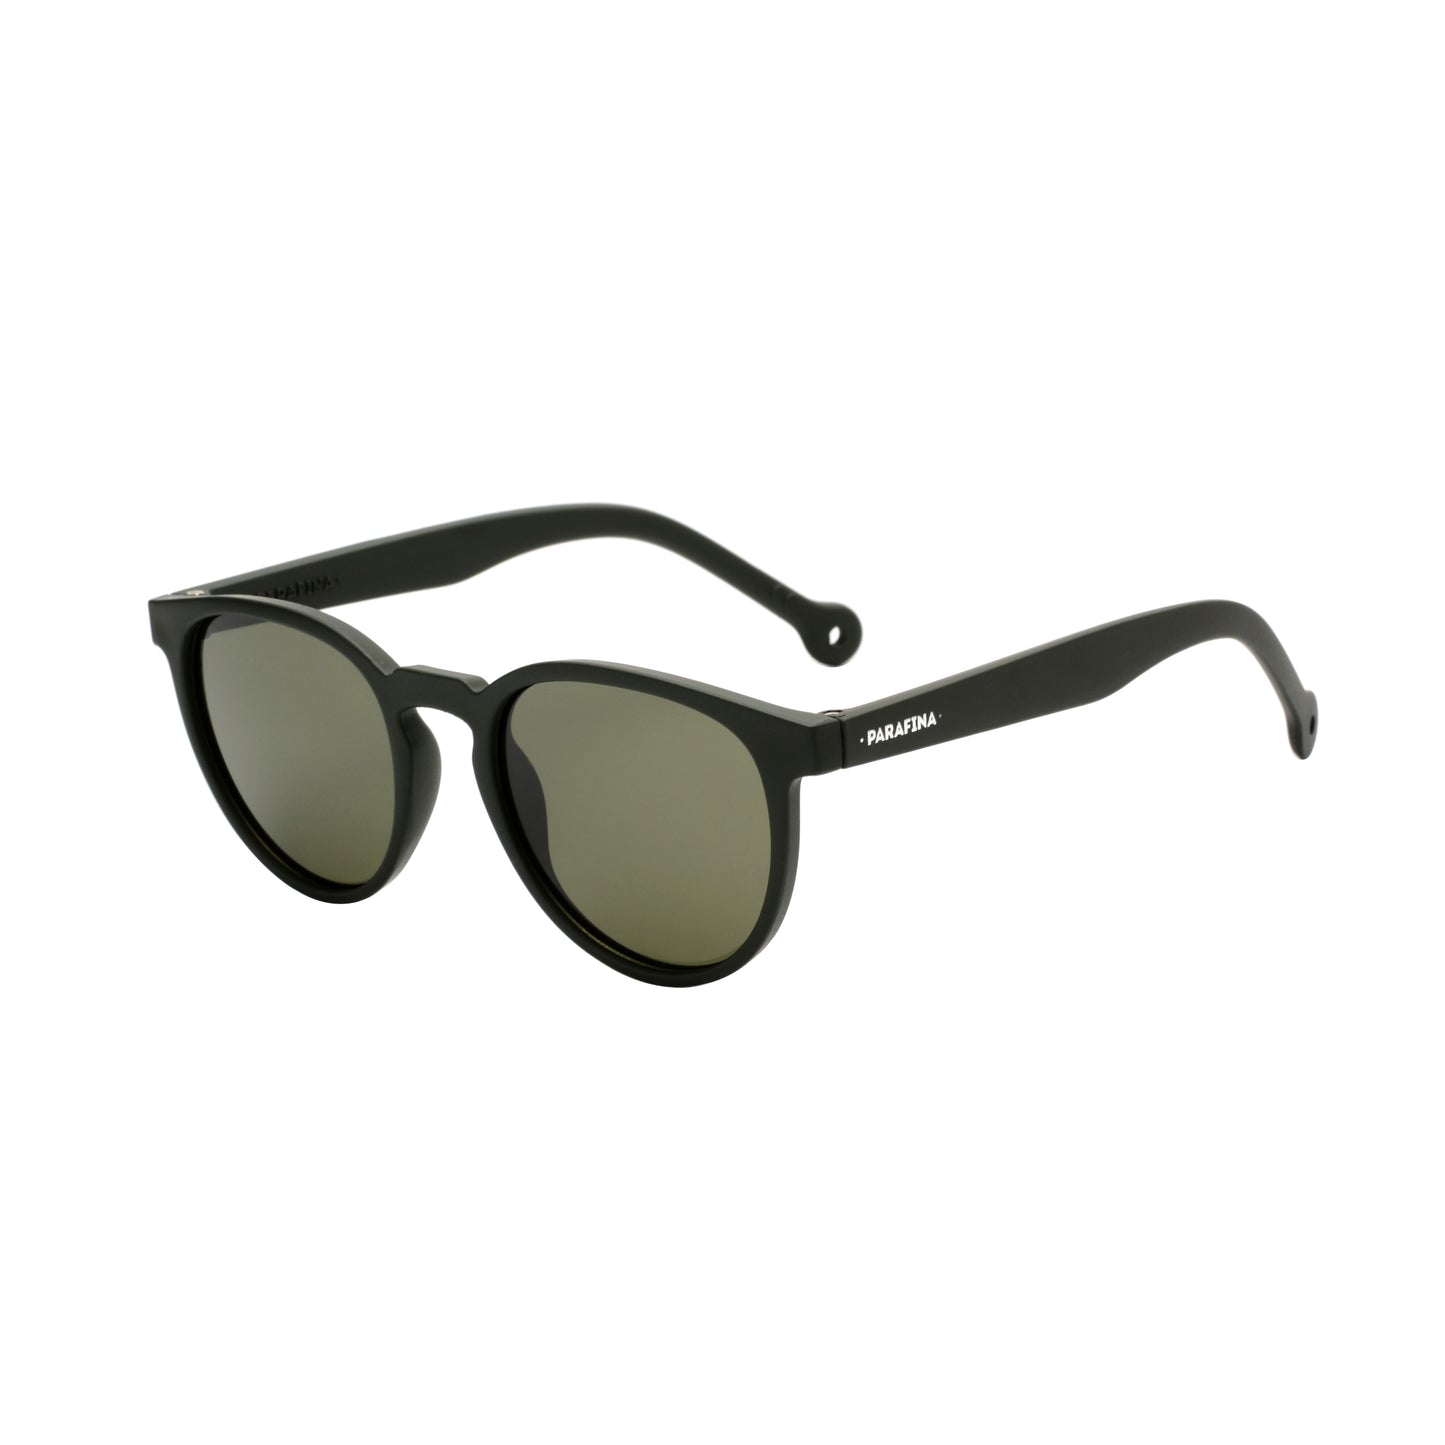 CAMINO Sunglasses - Green